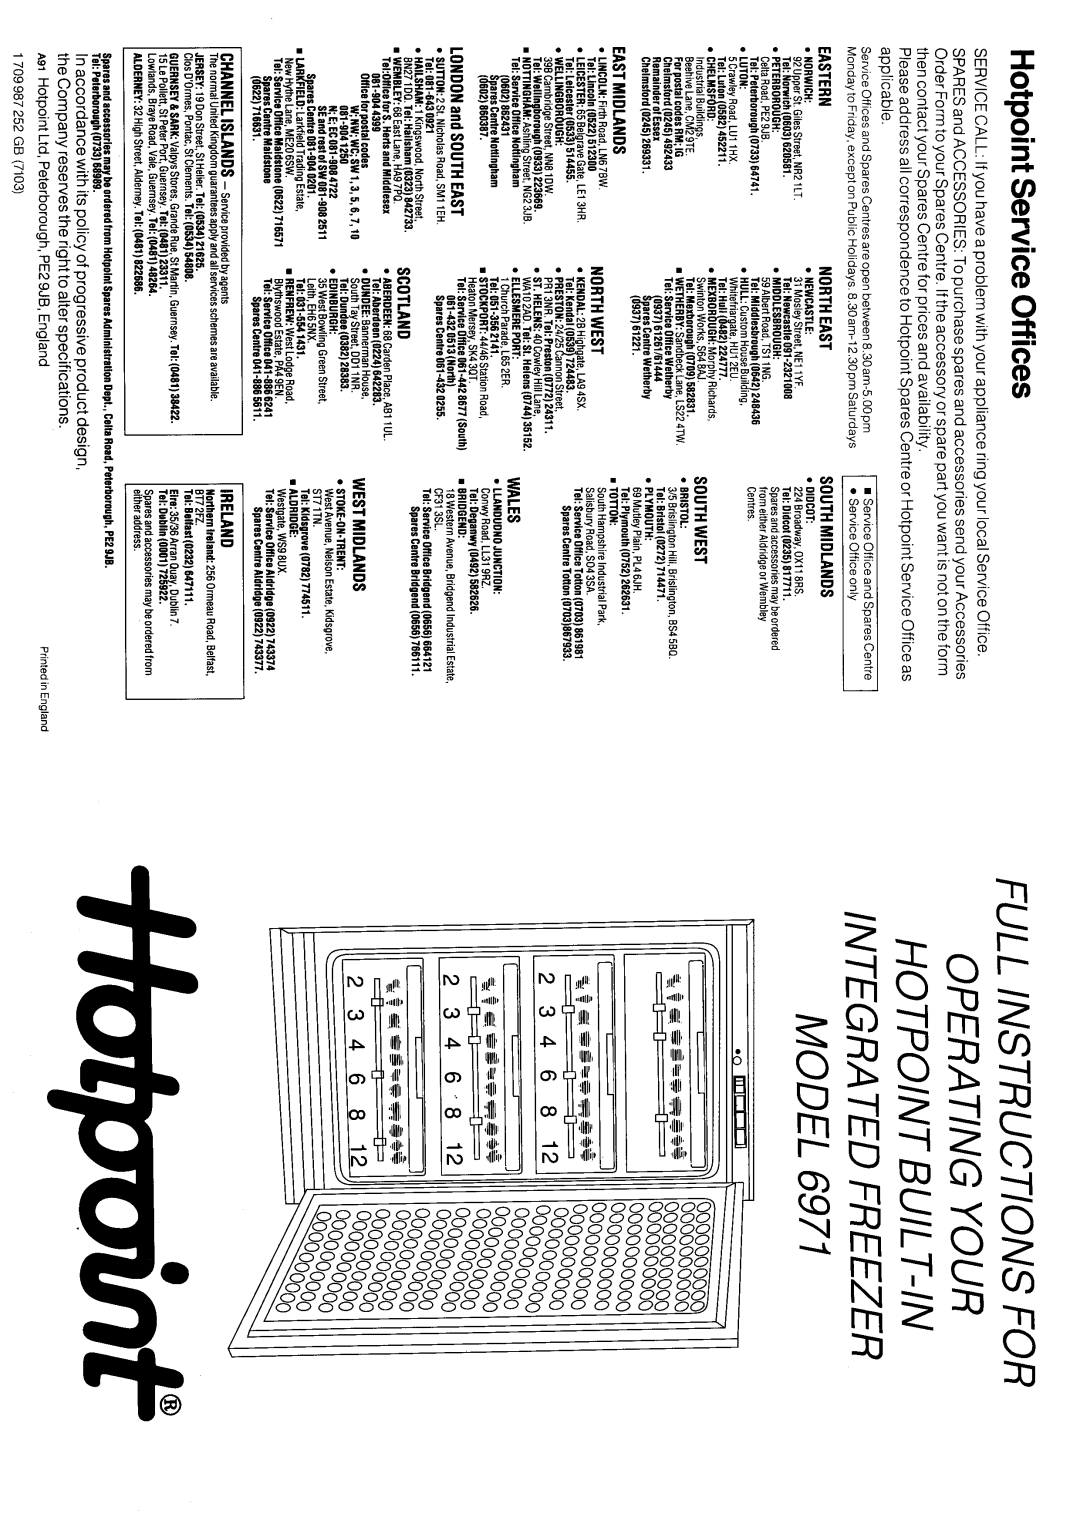 Hotpoint 6971 manual 